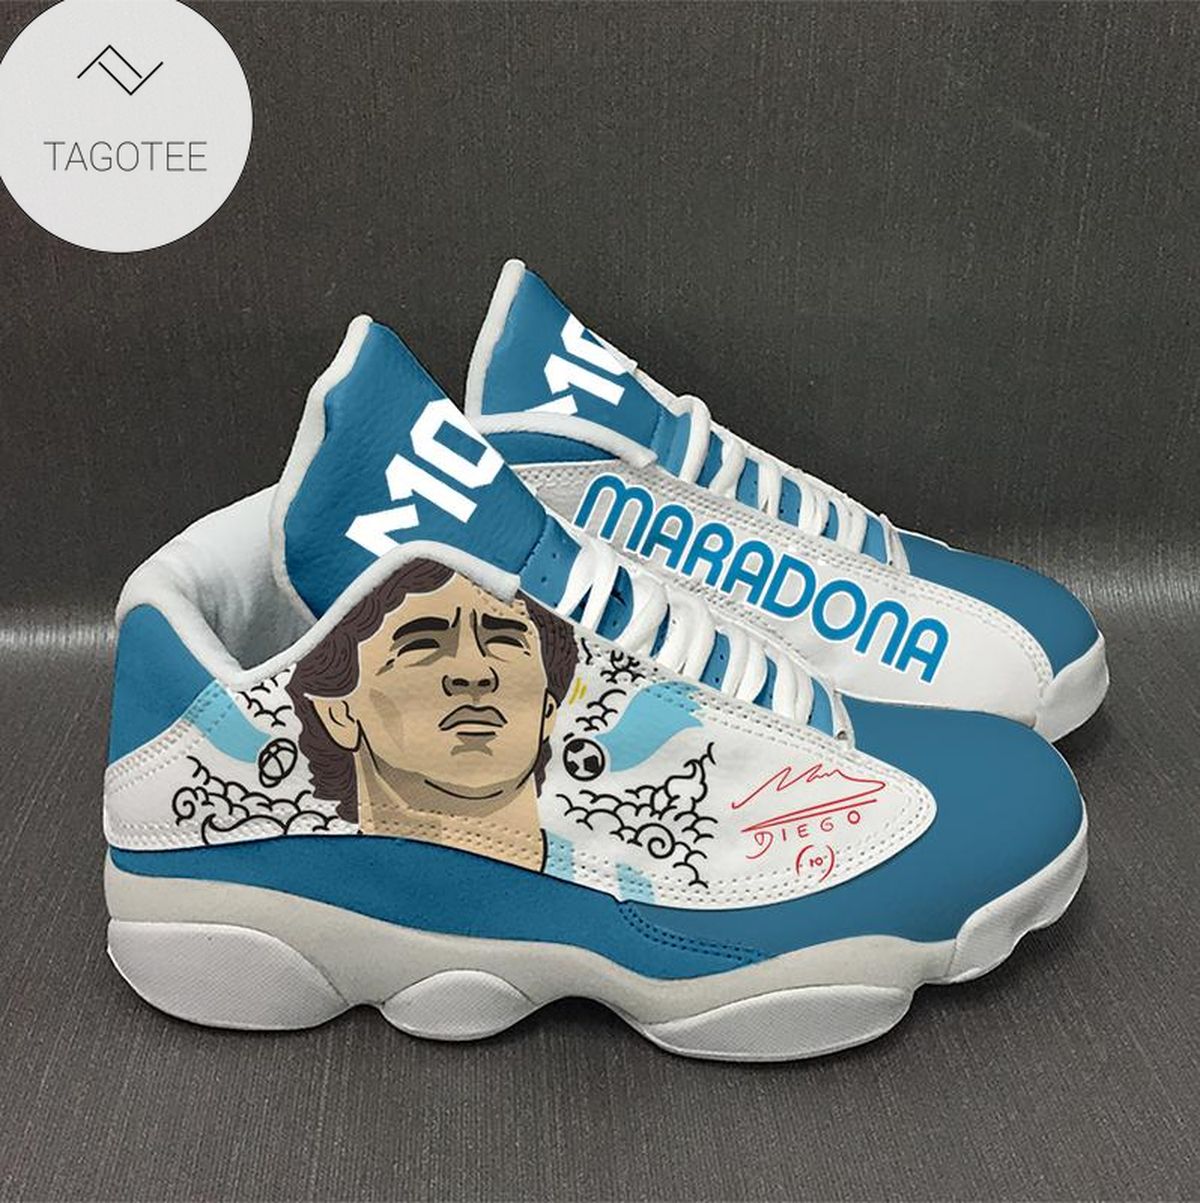 Diego Maradona Sneakers Air Jordan 13 Shoes